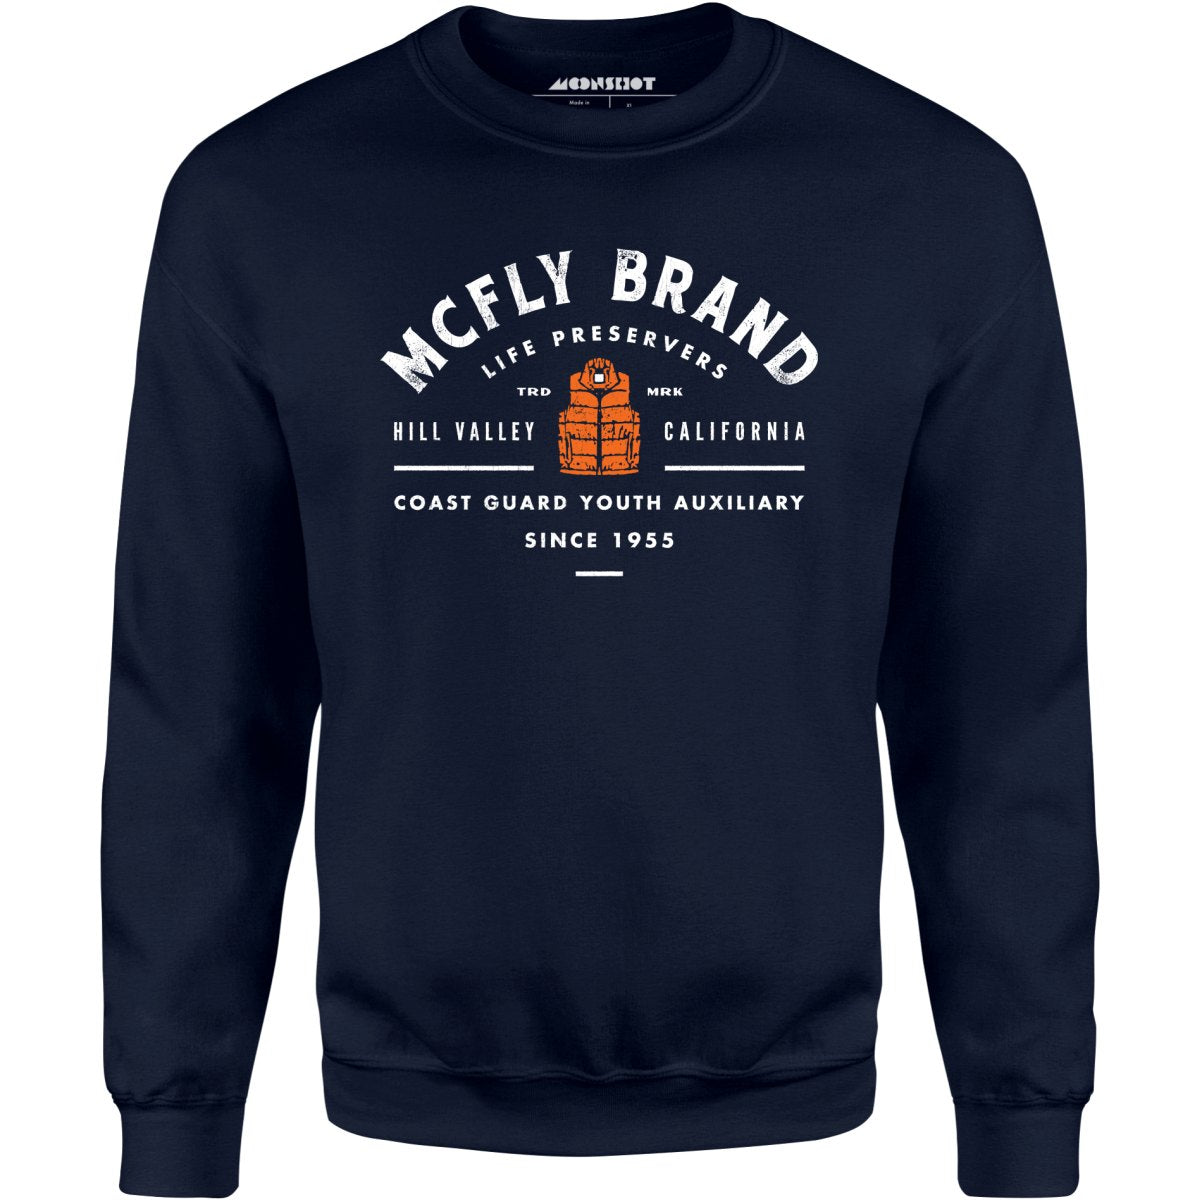 McFly Brand Life Preservers - Unisex Sweatshirt